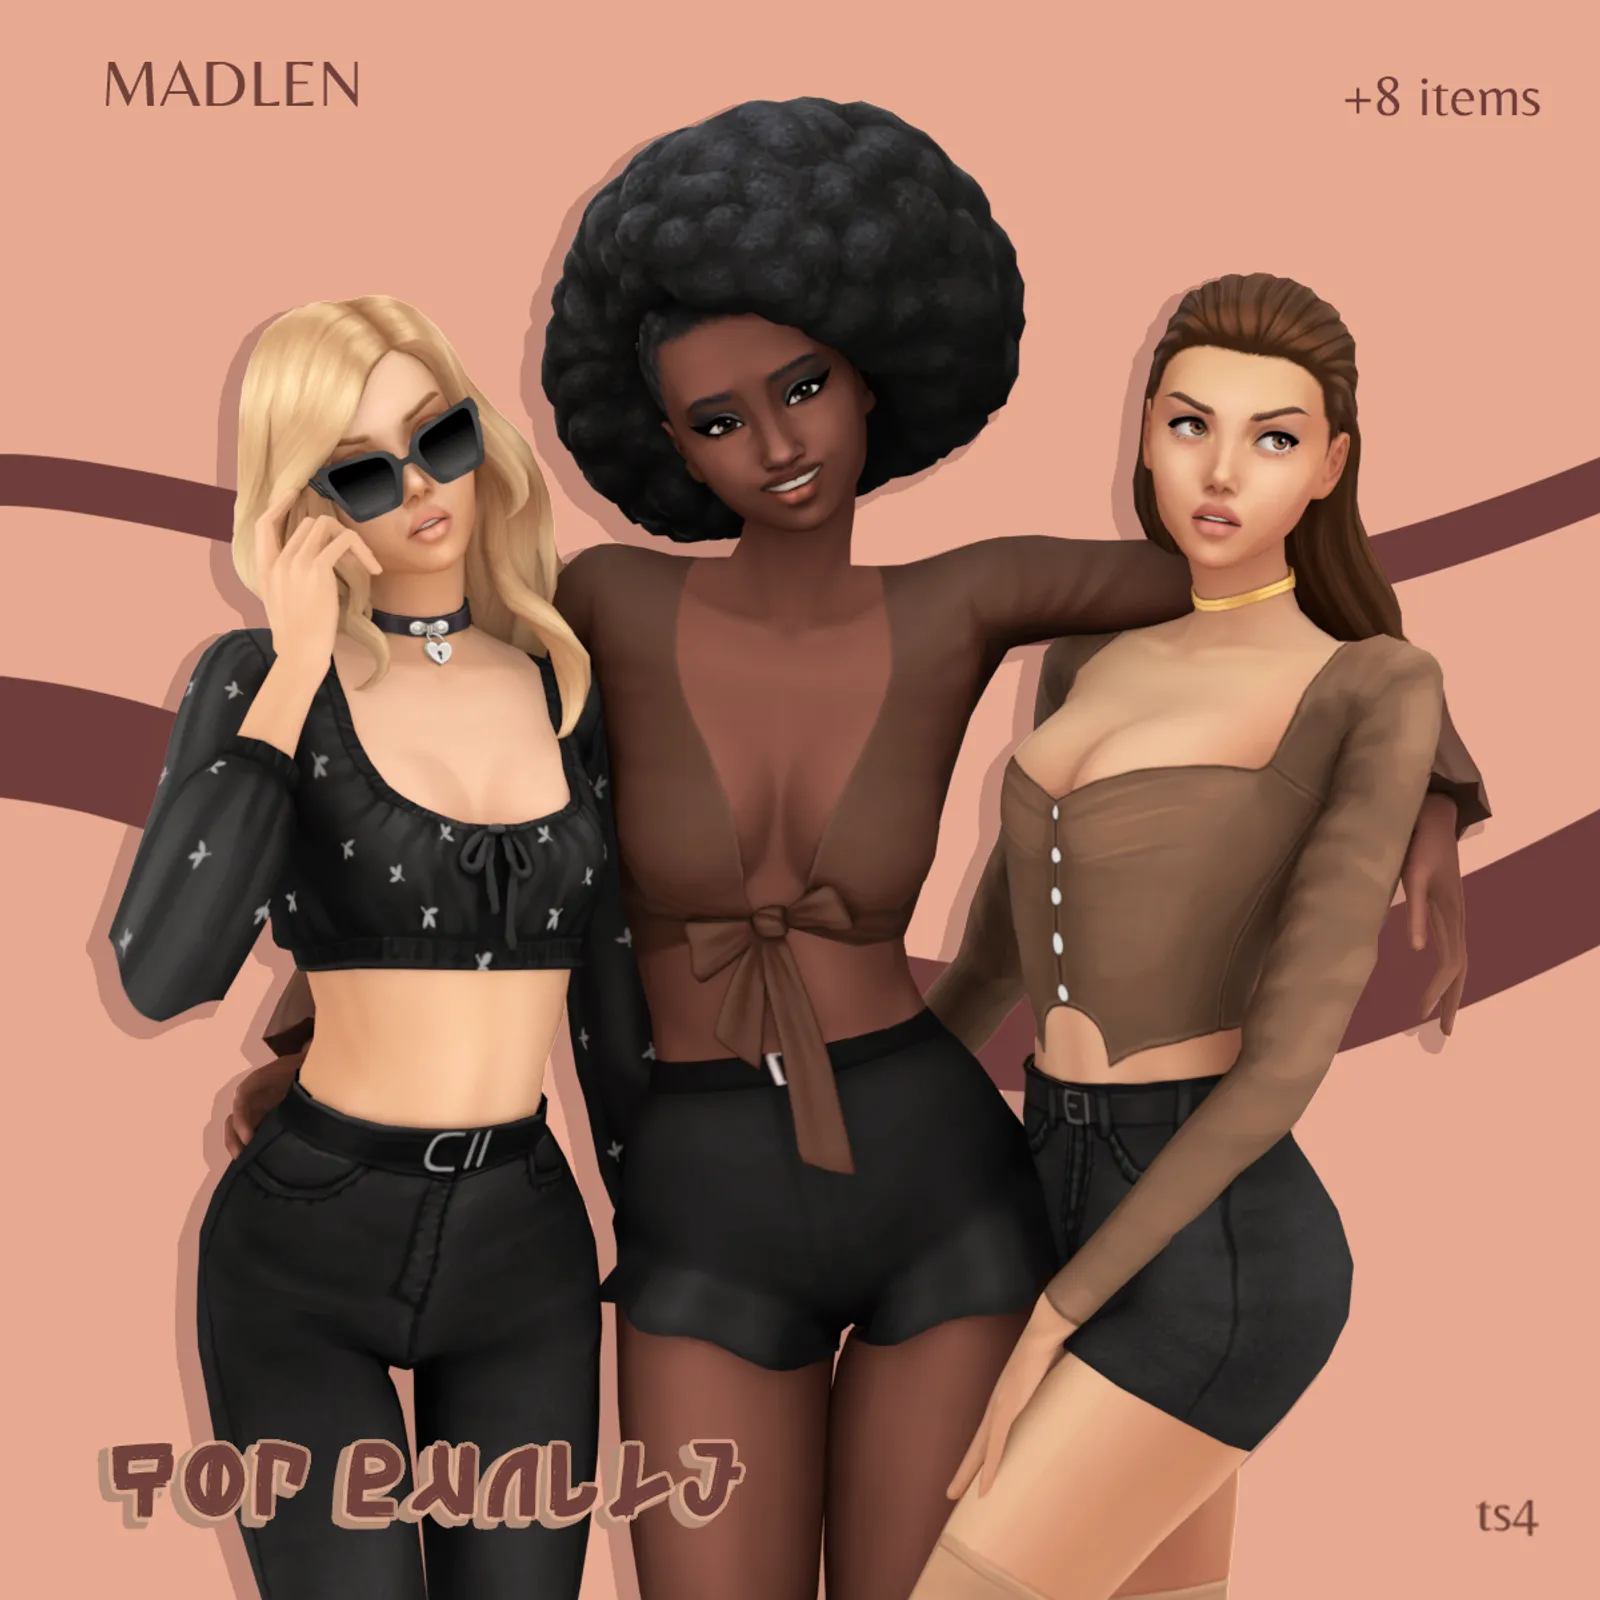 Top Bundle by Madlen